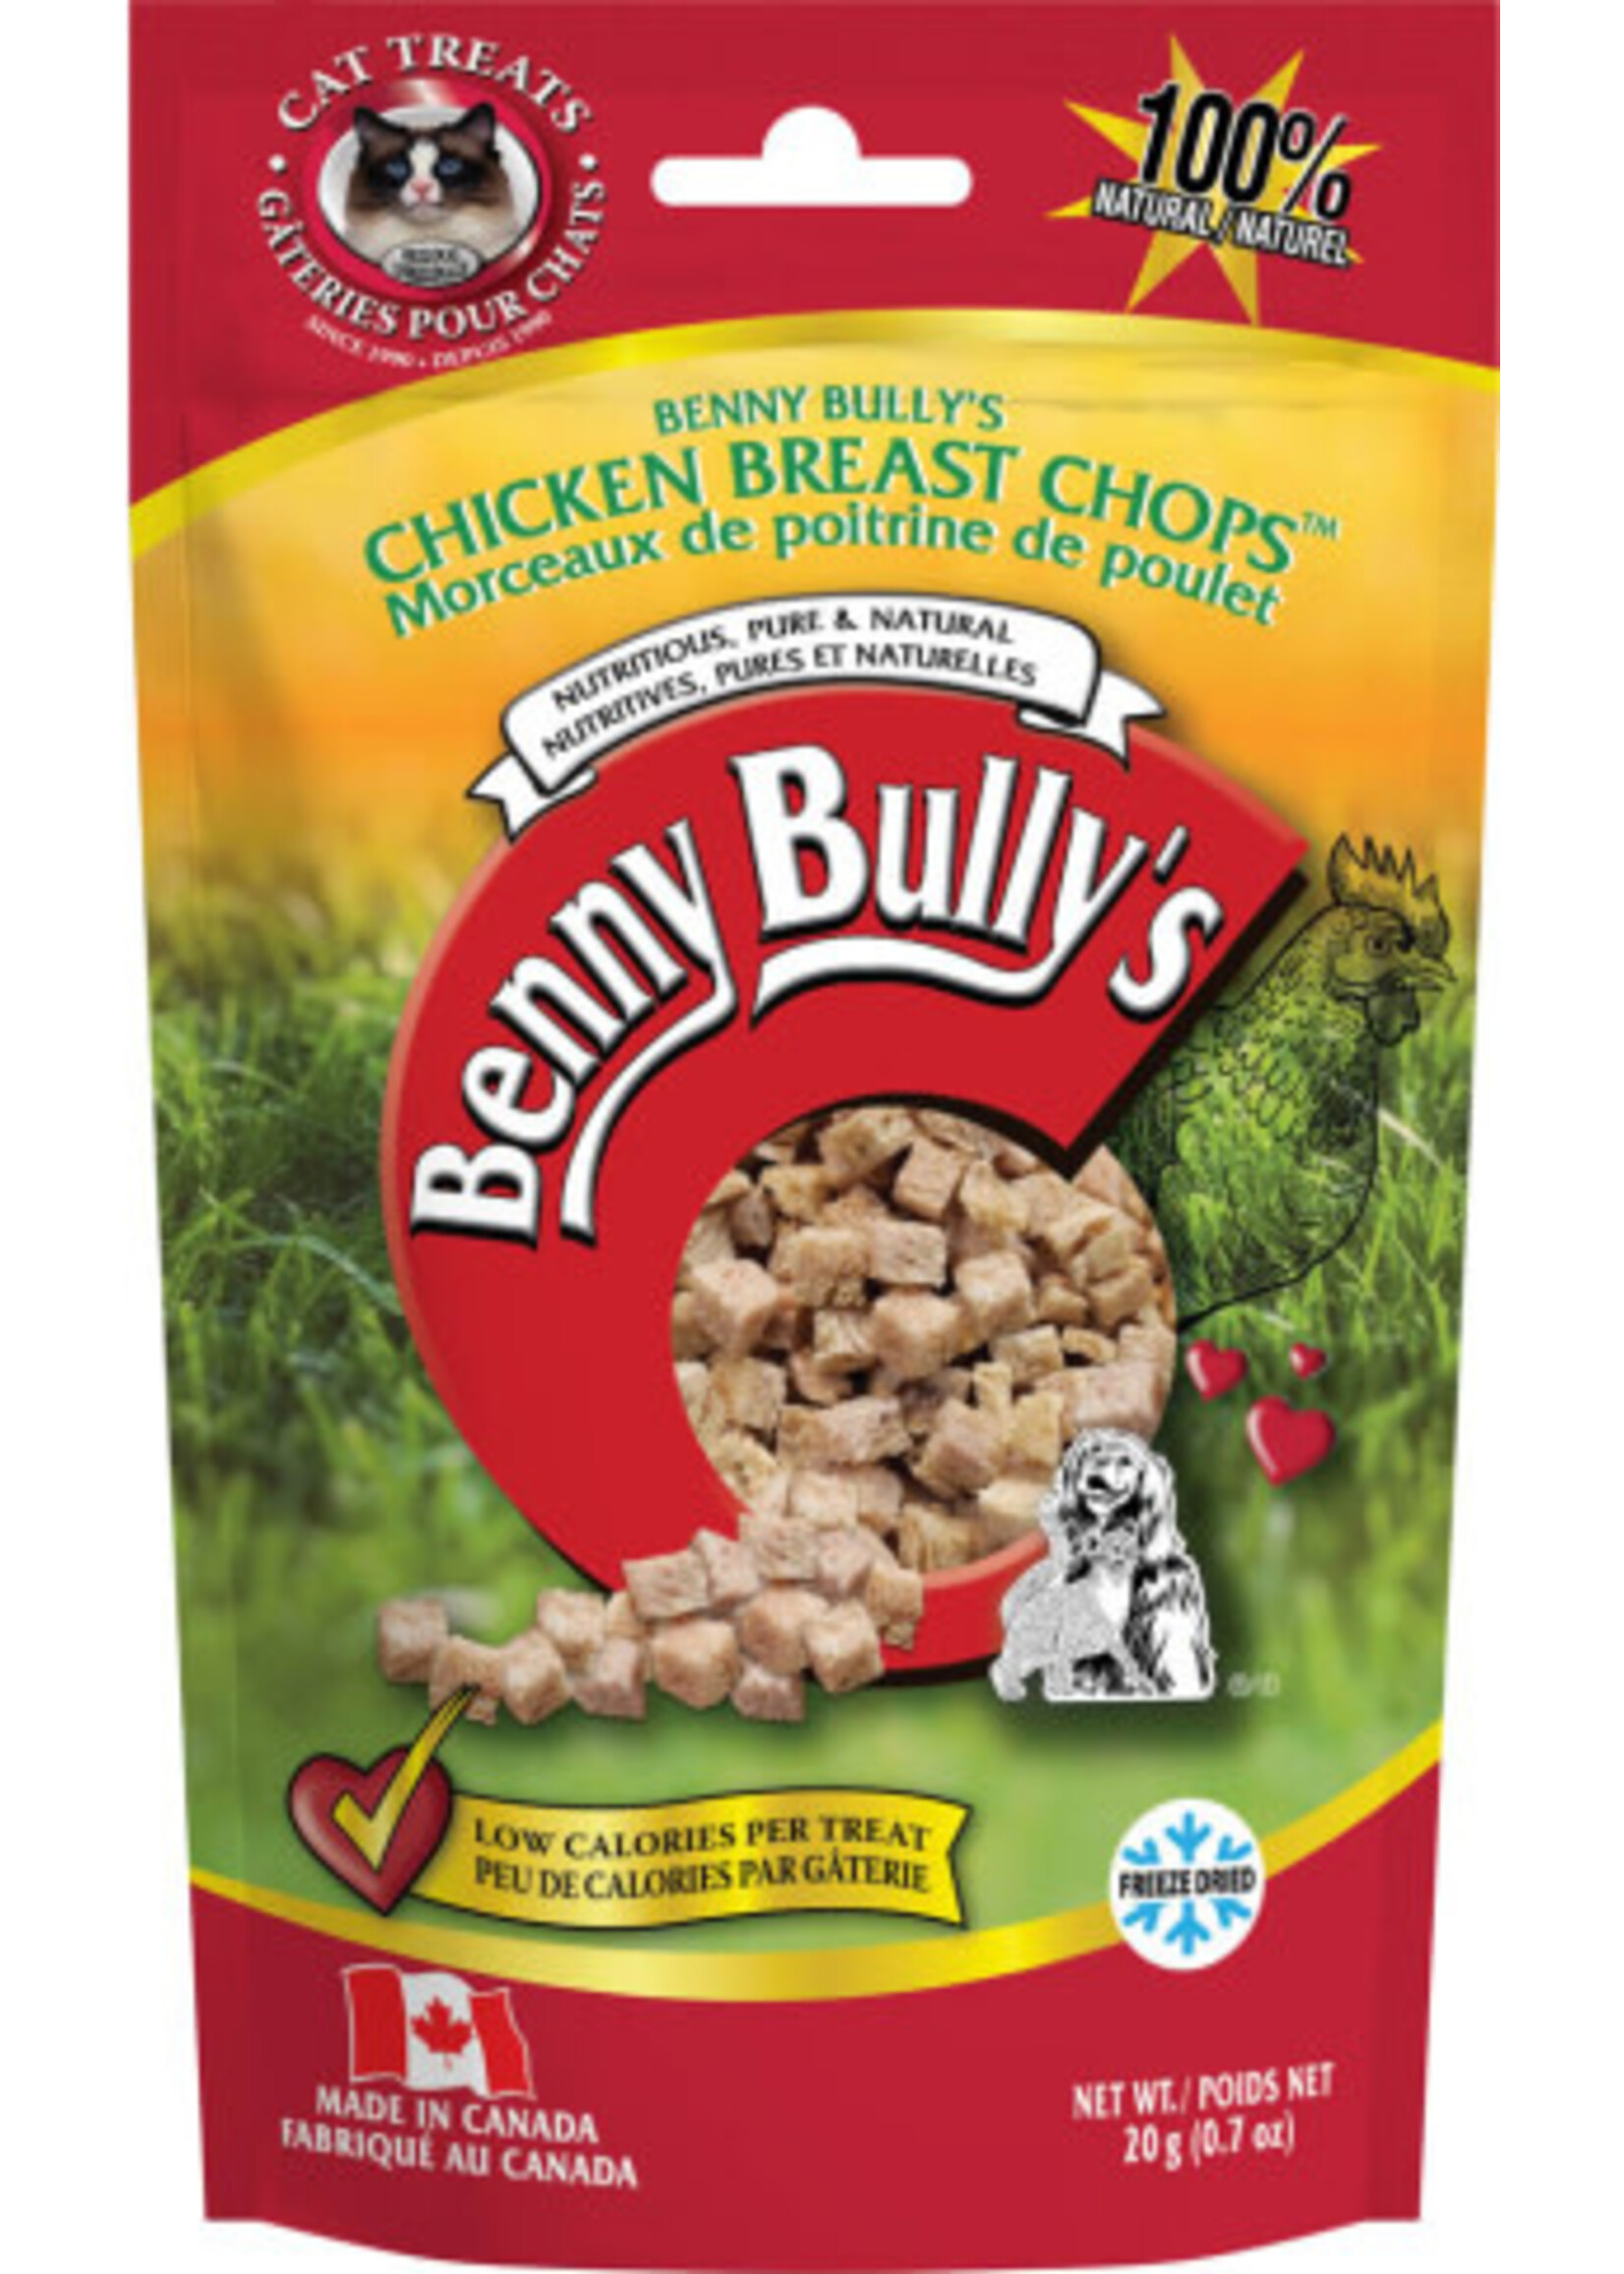 Benny Bully's Benny Bully's - Cat Chicken Breast Chops